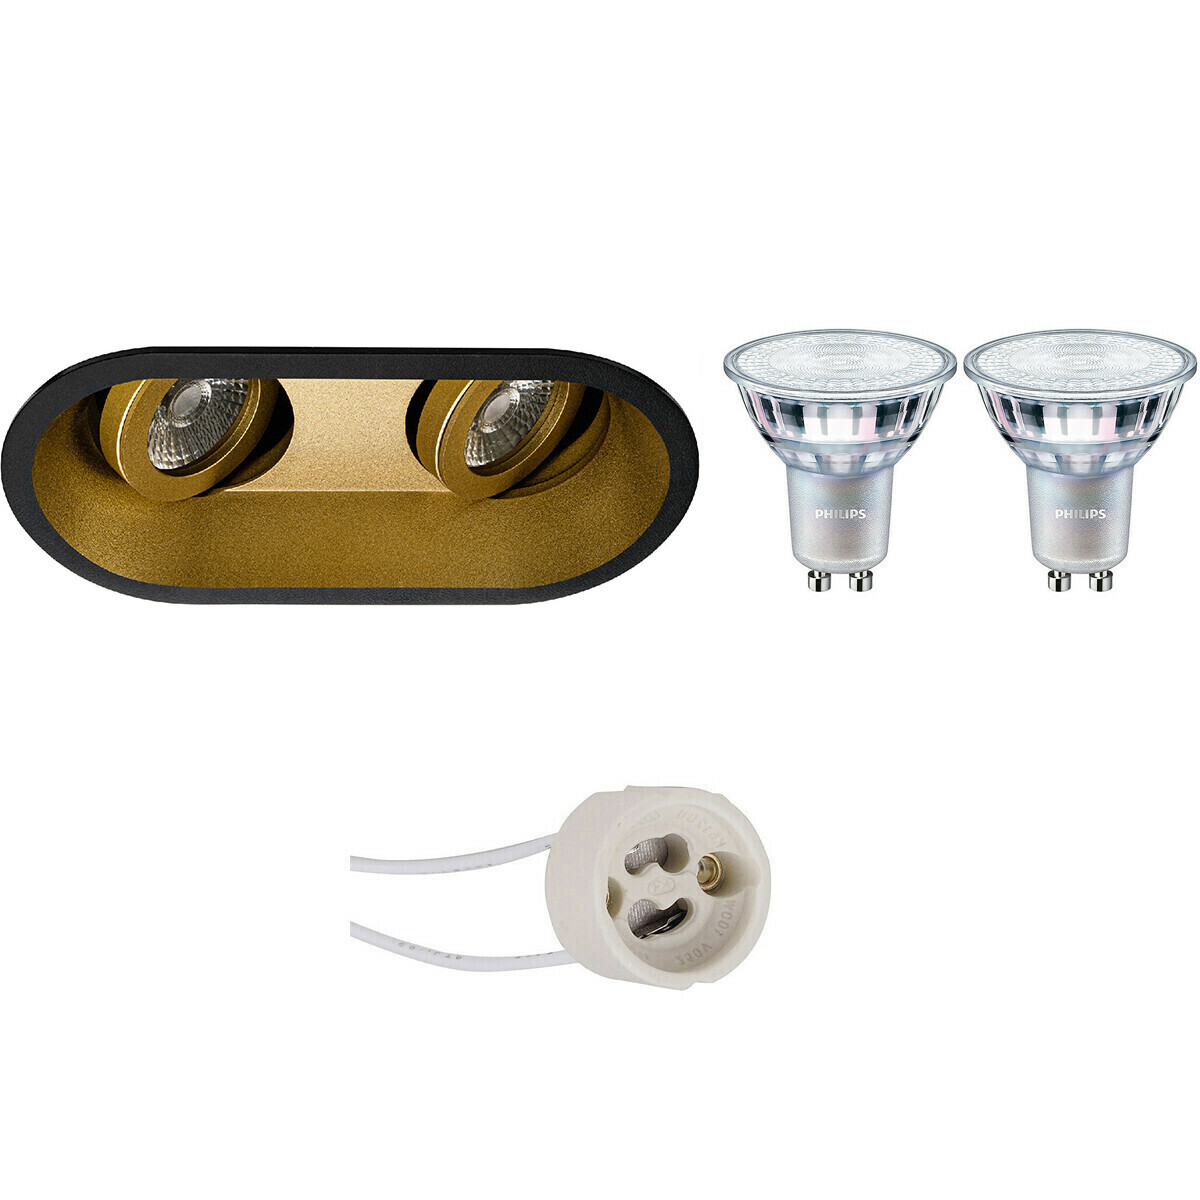 BES LED LED Spot Set - Pragmi Zano Pro - GU10 Fitting - Inbouw Ovaal Dubbel - Mat Zwart/Goud - Kantelbaar - 185x93mm - Philips - MASTER 927 36D VLE - 3.7W - Warm Wit 2200K-2700K - DimTone Dimbaar